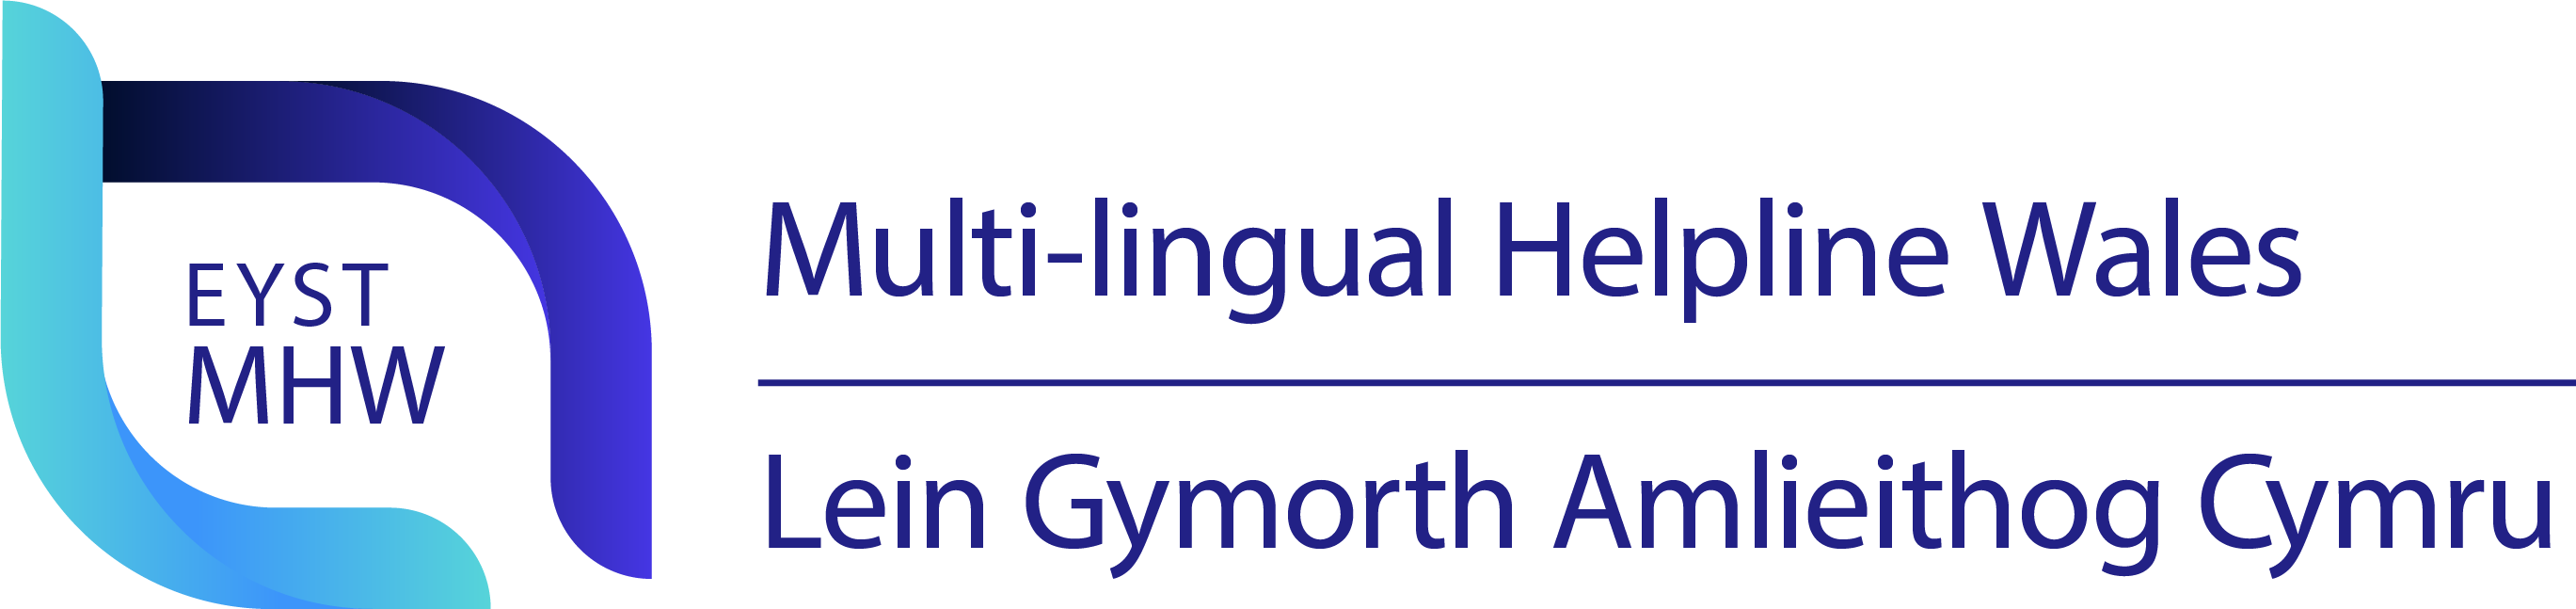 Multi lingual helpline logo transparent